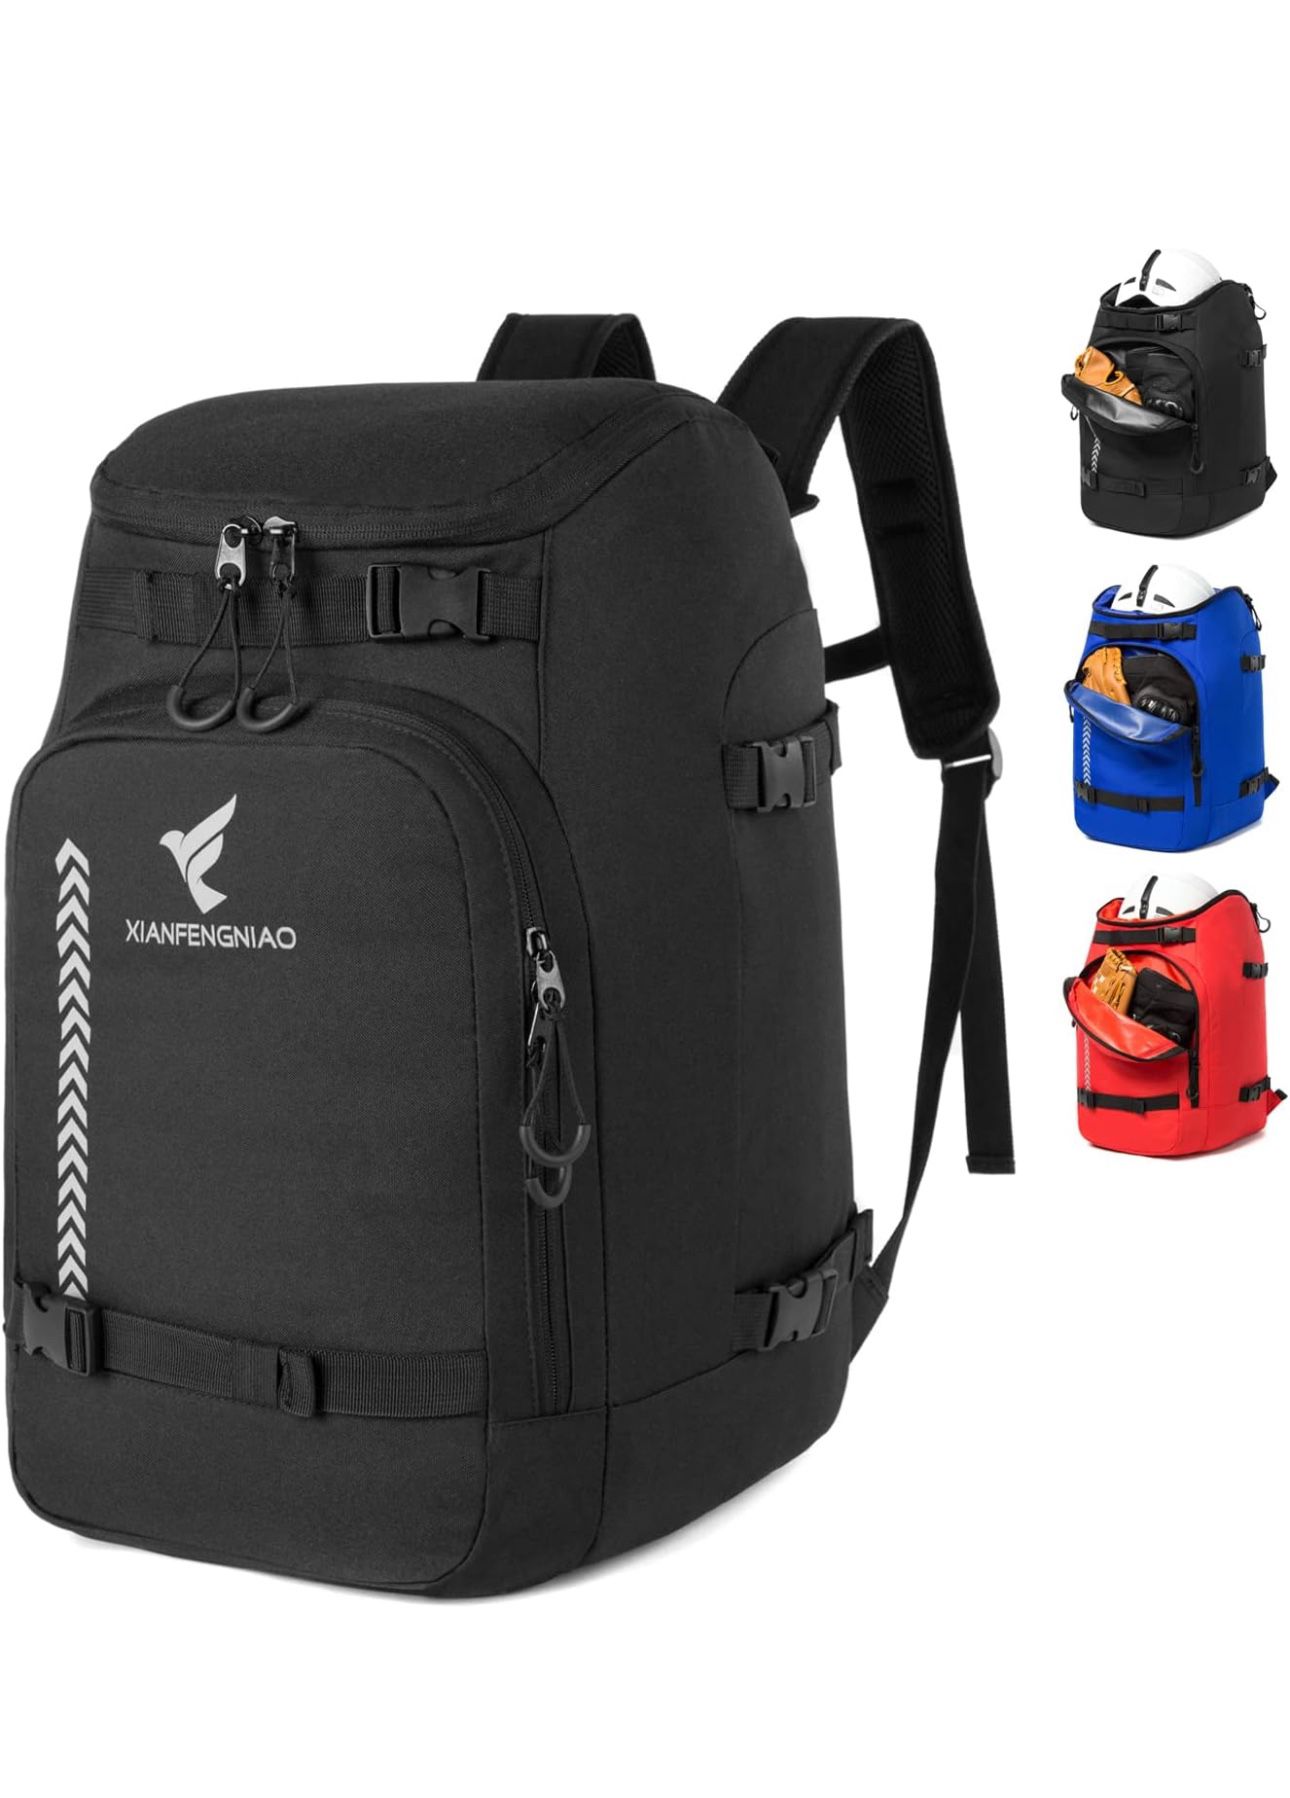  Ski Boot Bag,50L Waterproof Ski Boot Travel Backpack for Ski & Snowboard Boots, Ski Helmet, Goggles, Gloves, Skis, Snowboard & Accessories for Men,Wo